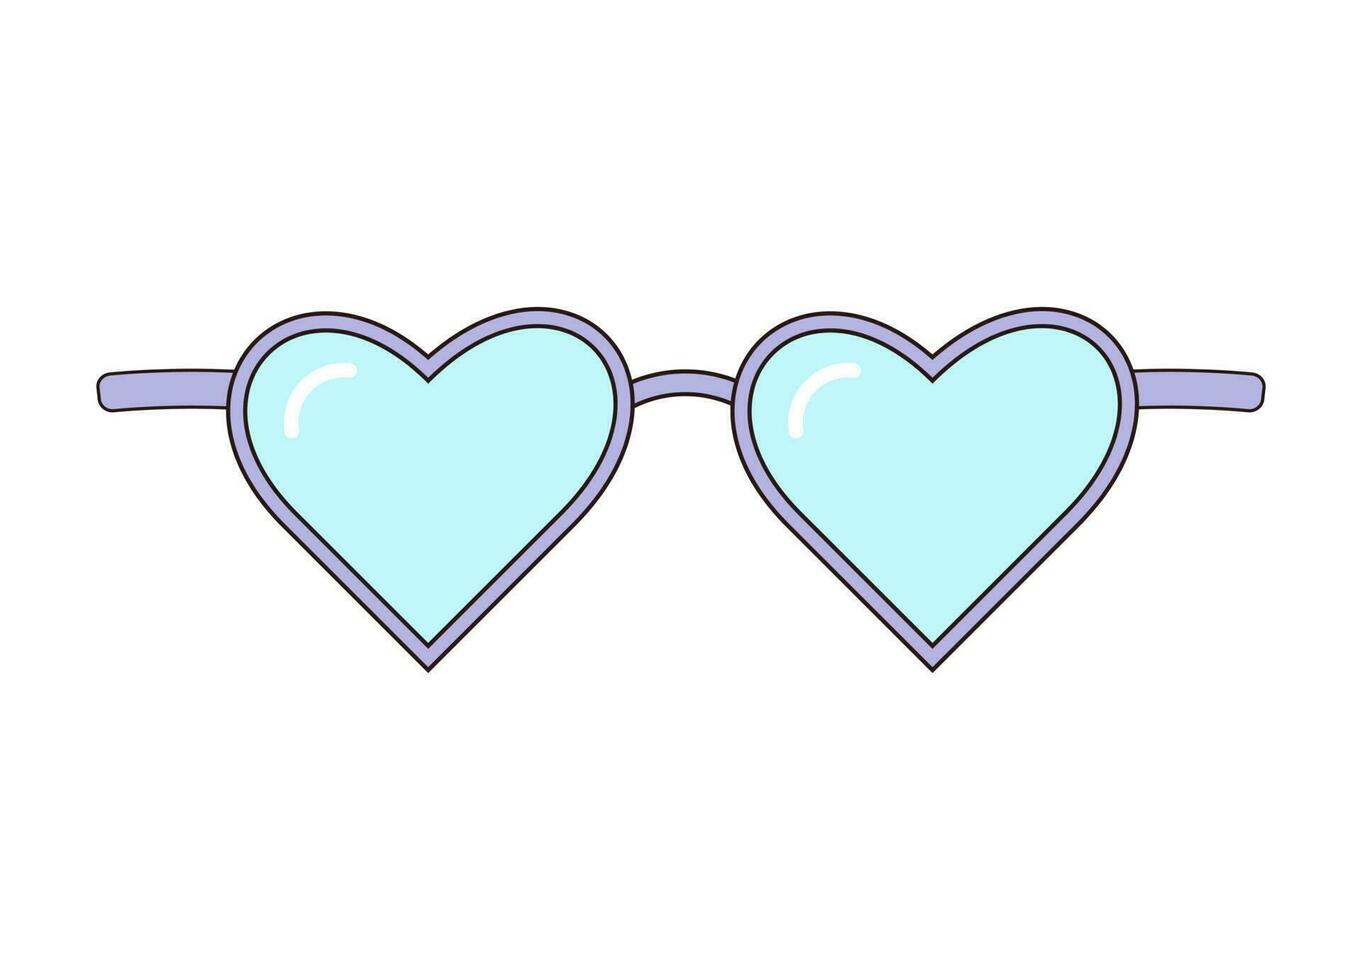 Heart shaped sunglasses. Groovy retro fashion style. Vector illustration isolated on white background.